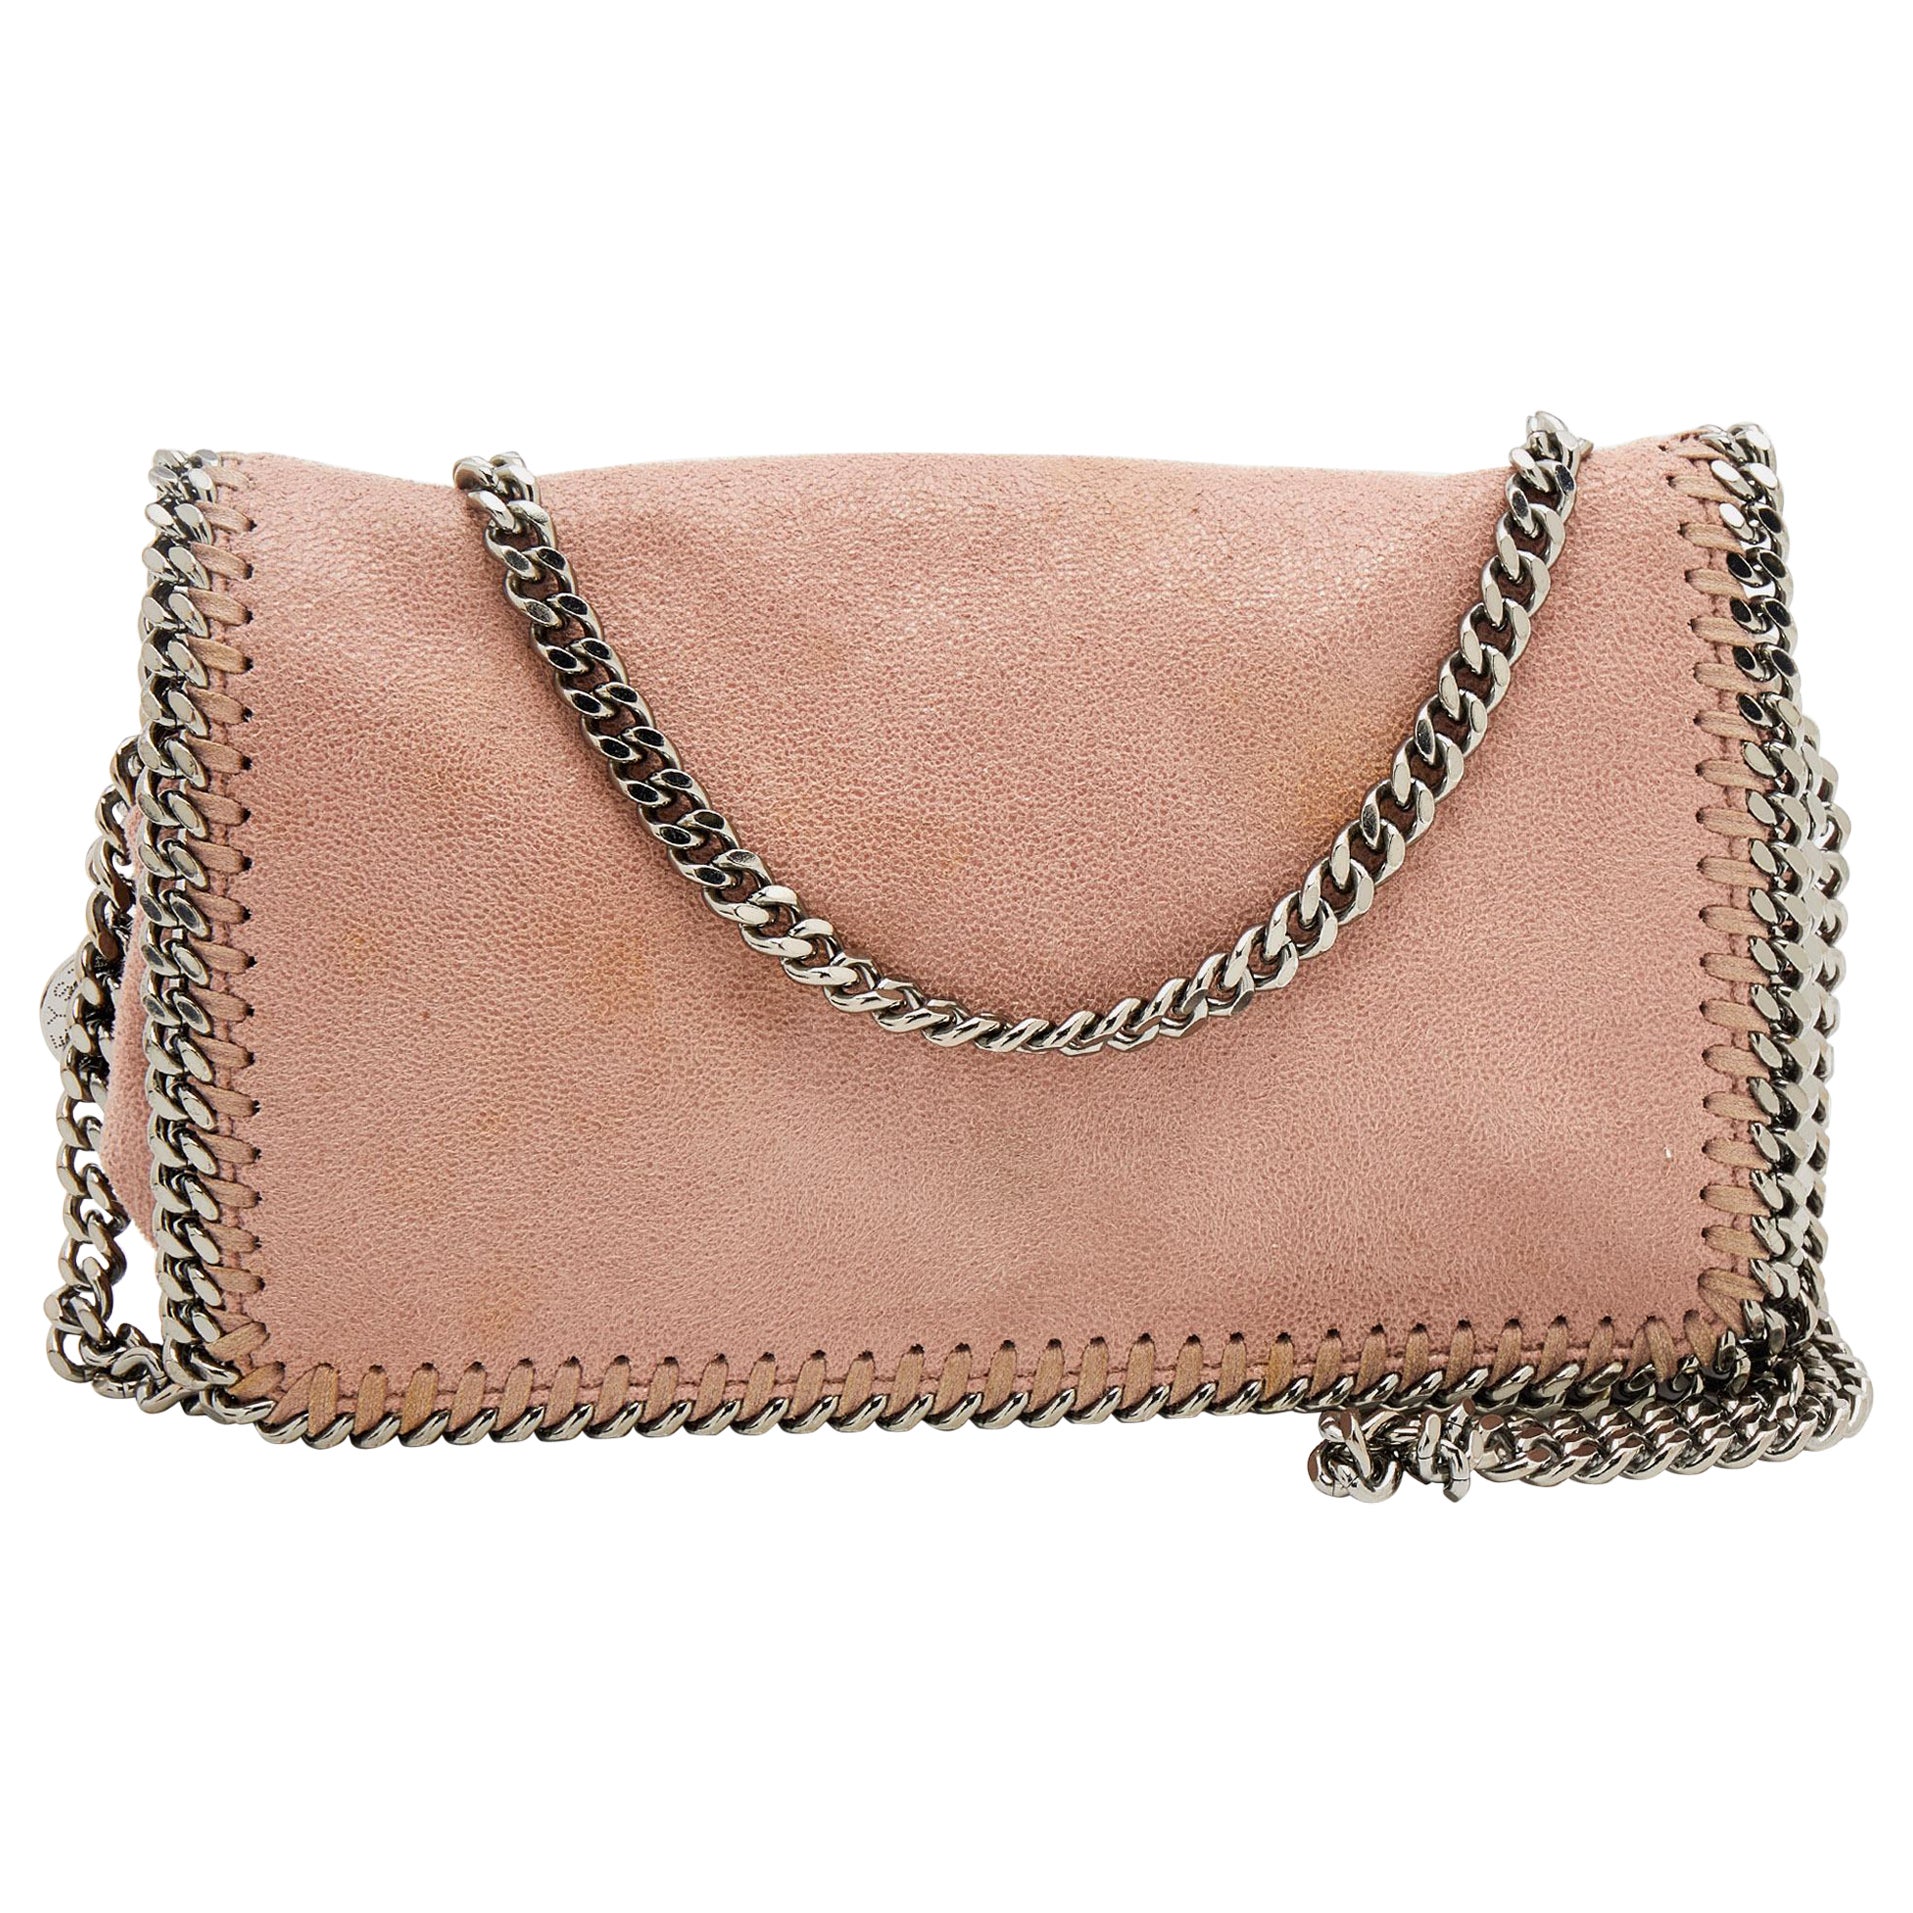 Stella McCartney Pale Pink Faux Leather Falabella Flap Shoulder Bag